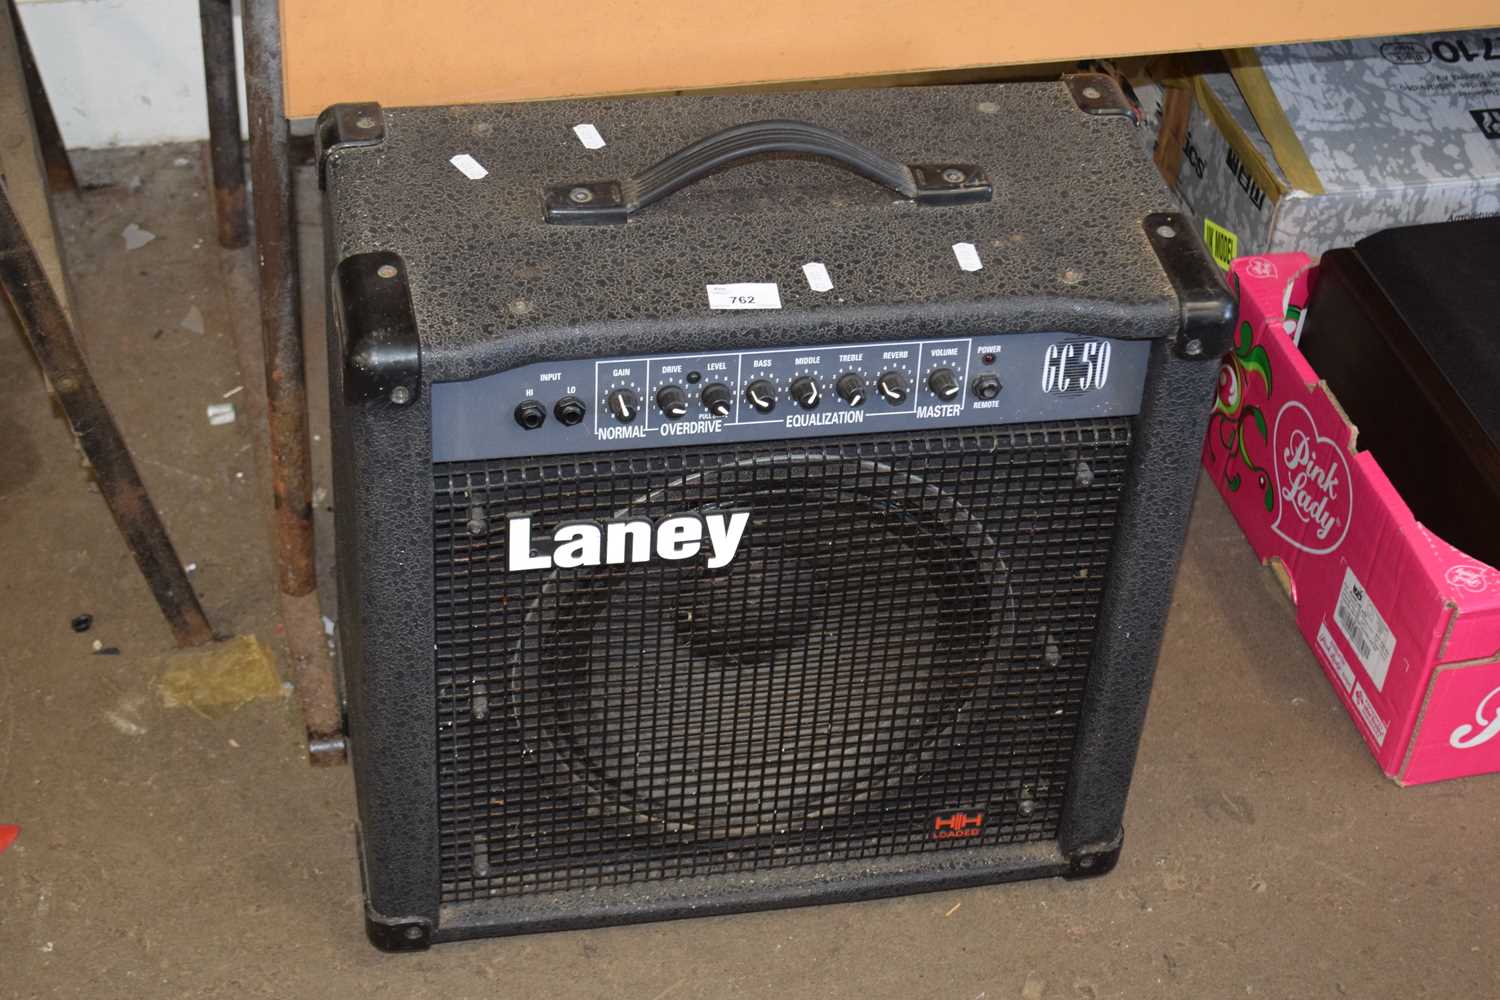 Laney guitar amplifier